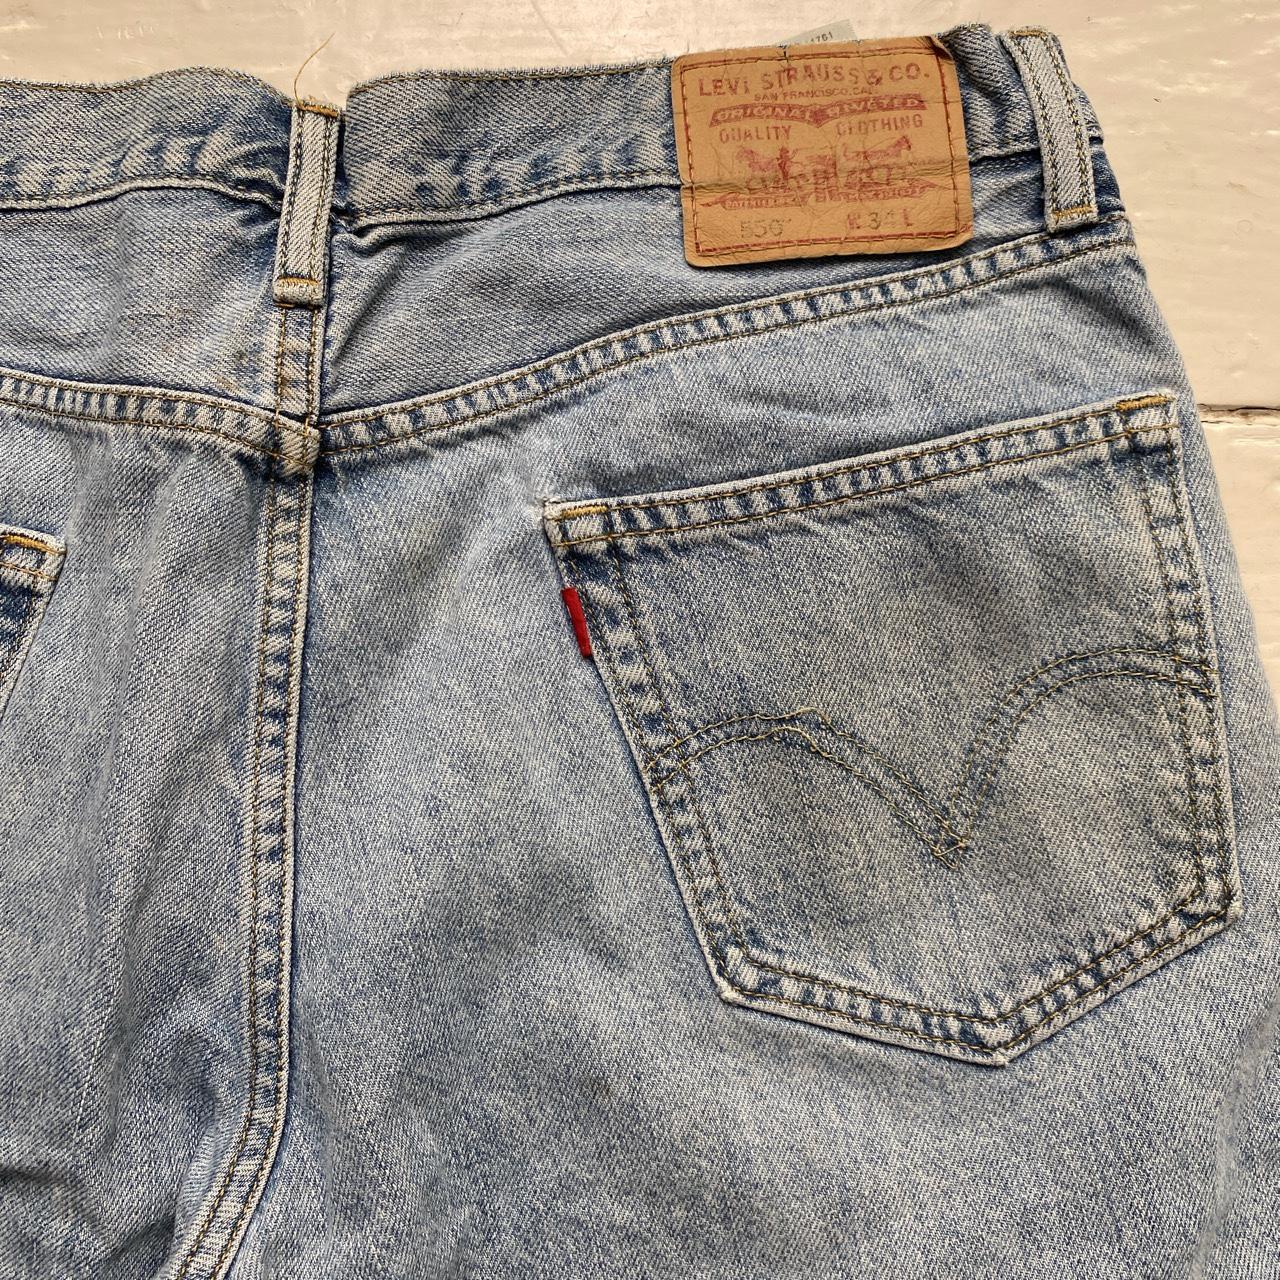 Levis 550 Baggy Vintage Light Blue Jean Short Jorts